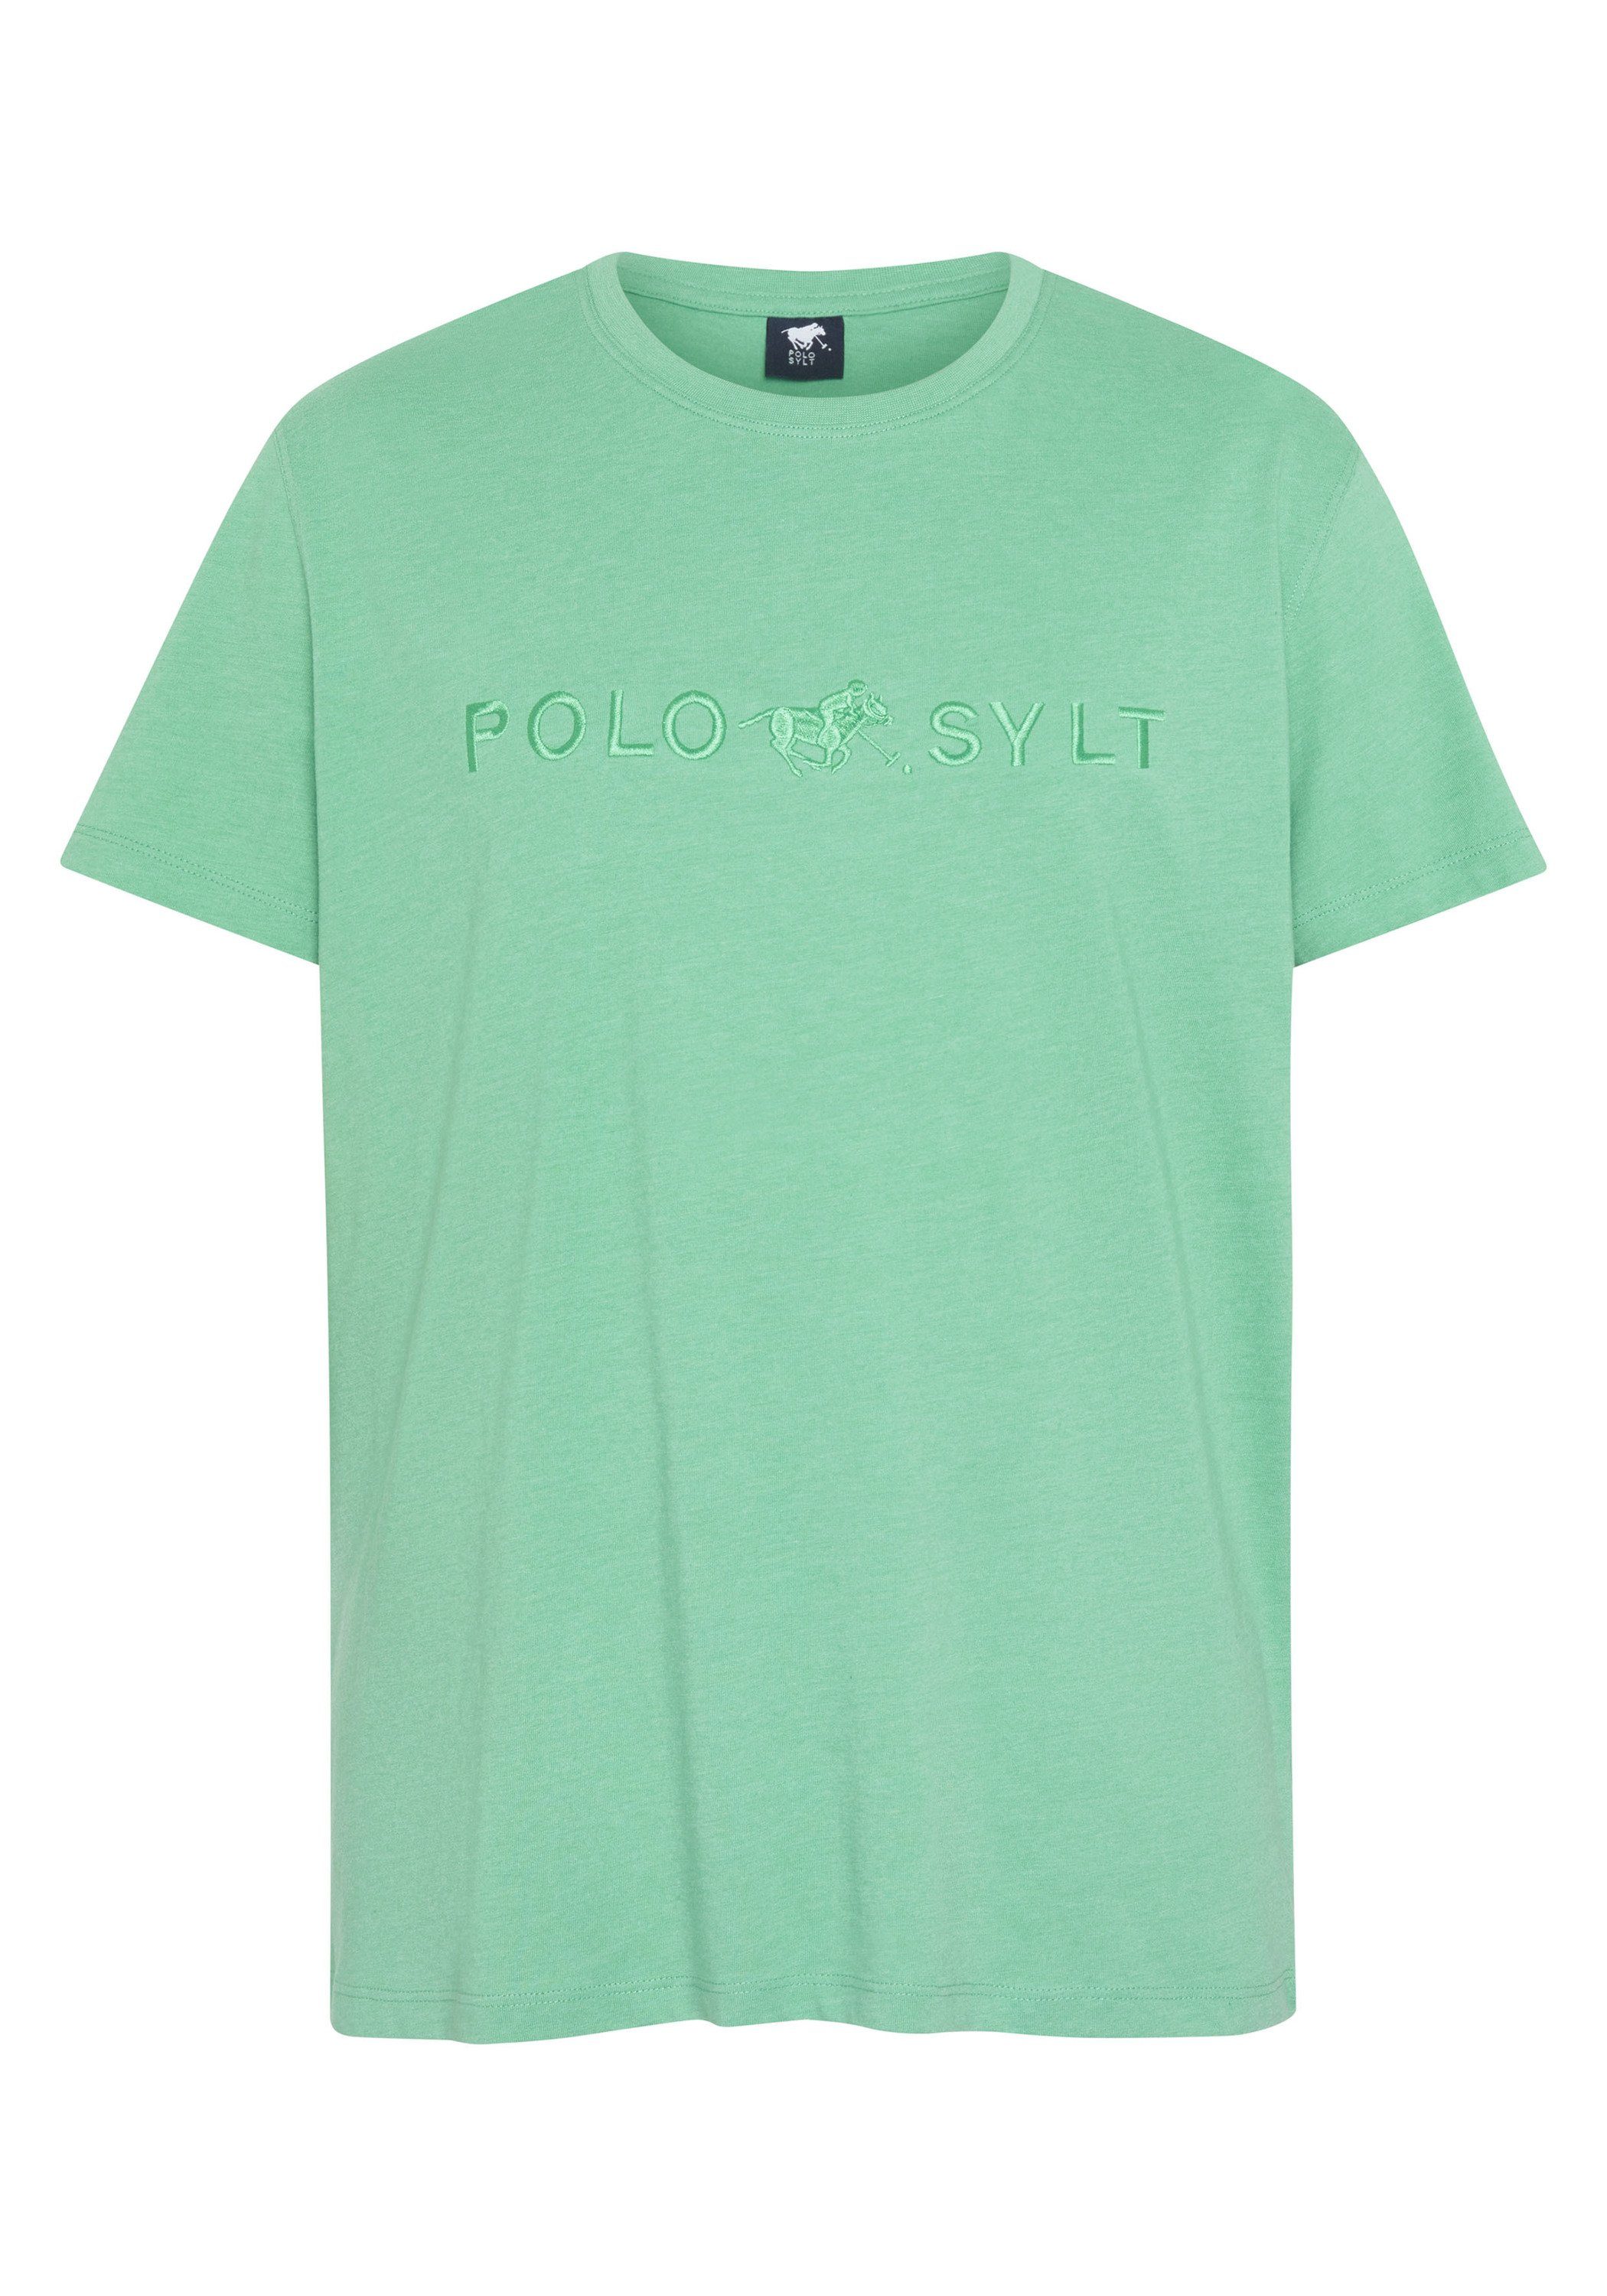 Polo Sylt Print-Shirt mit Logo-Schriftzug 16-5721 Marine Green